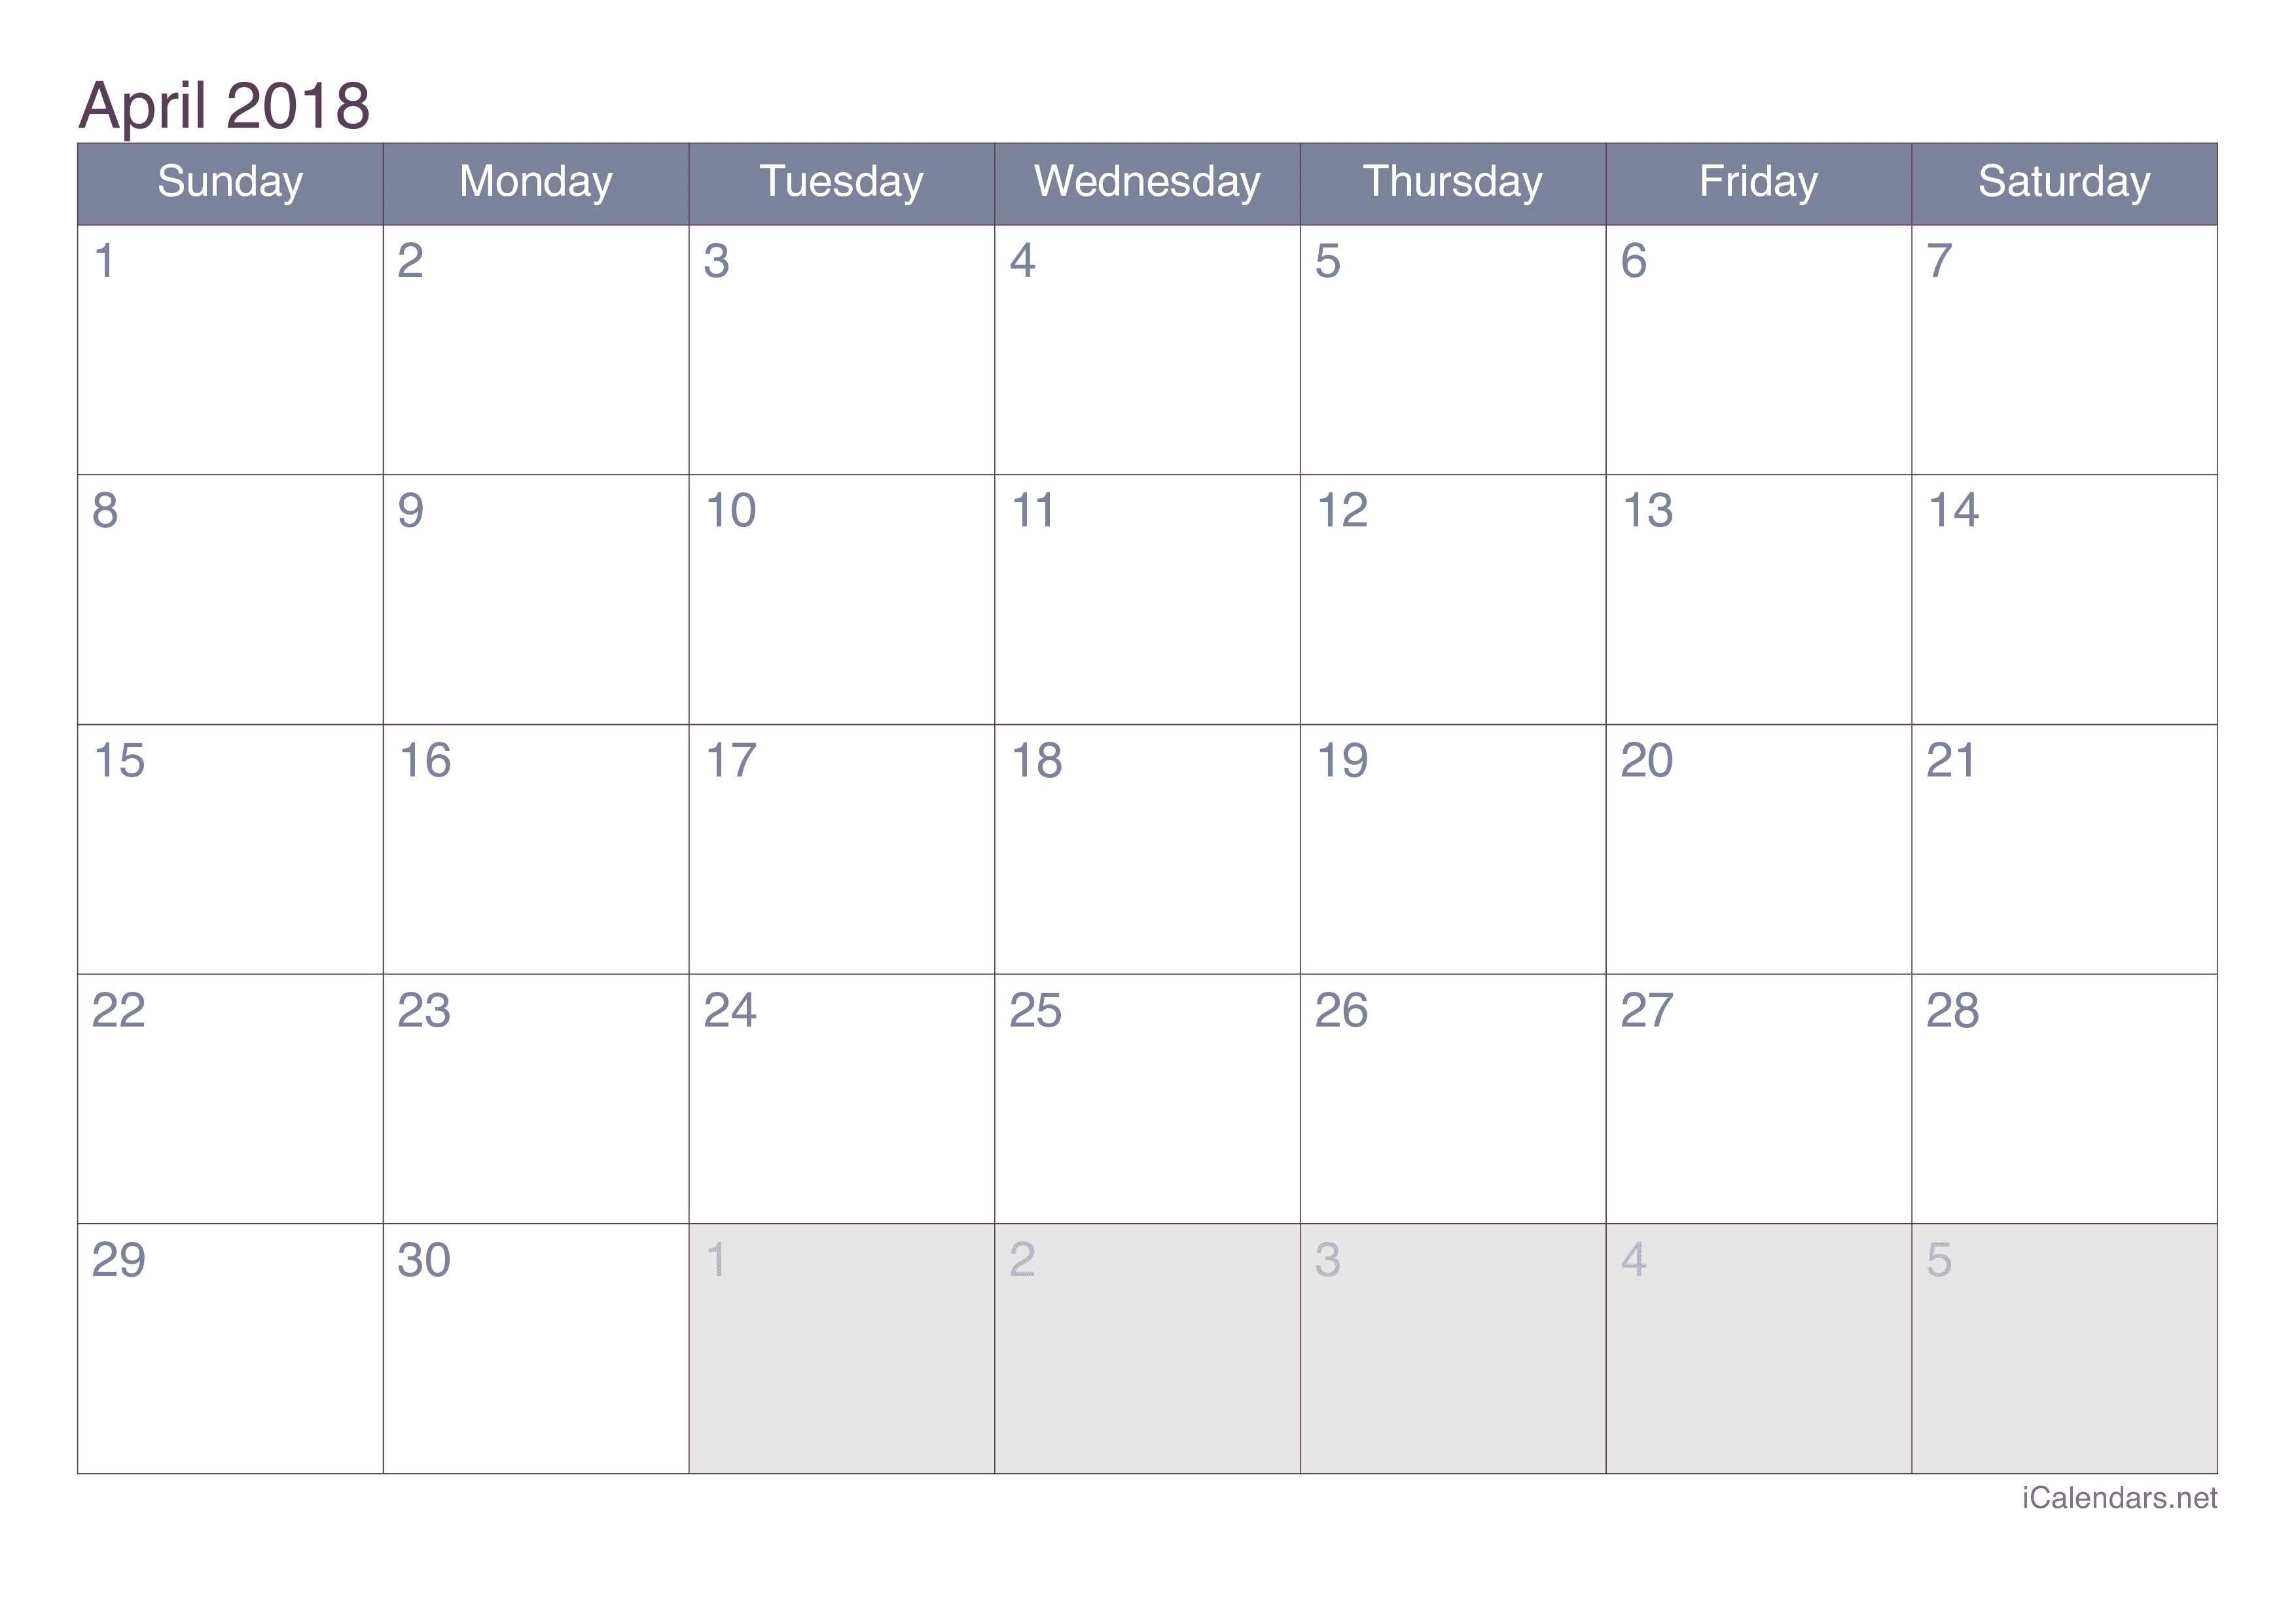 april-2018-printable-calendar-icalendars